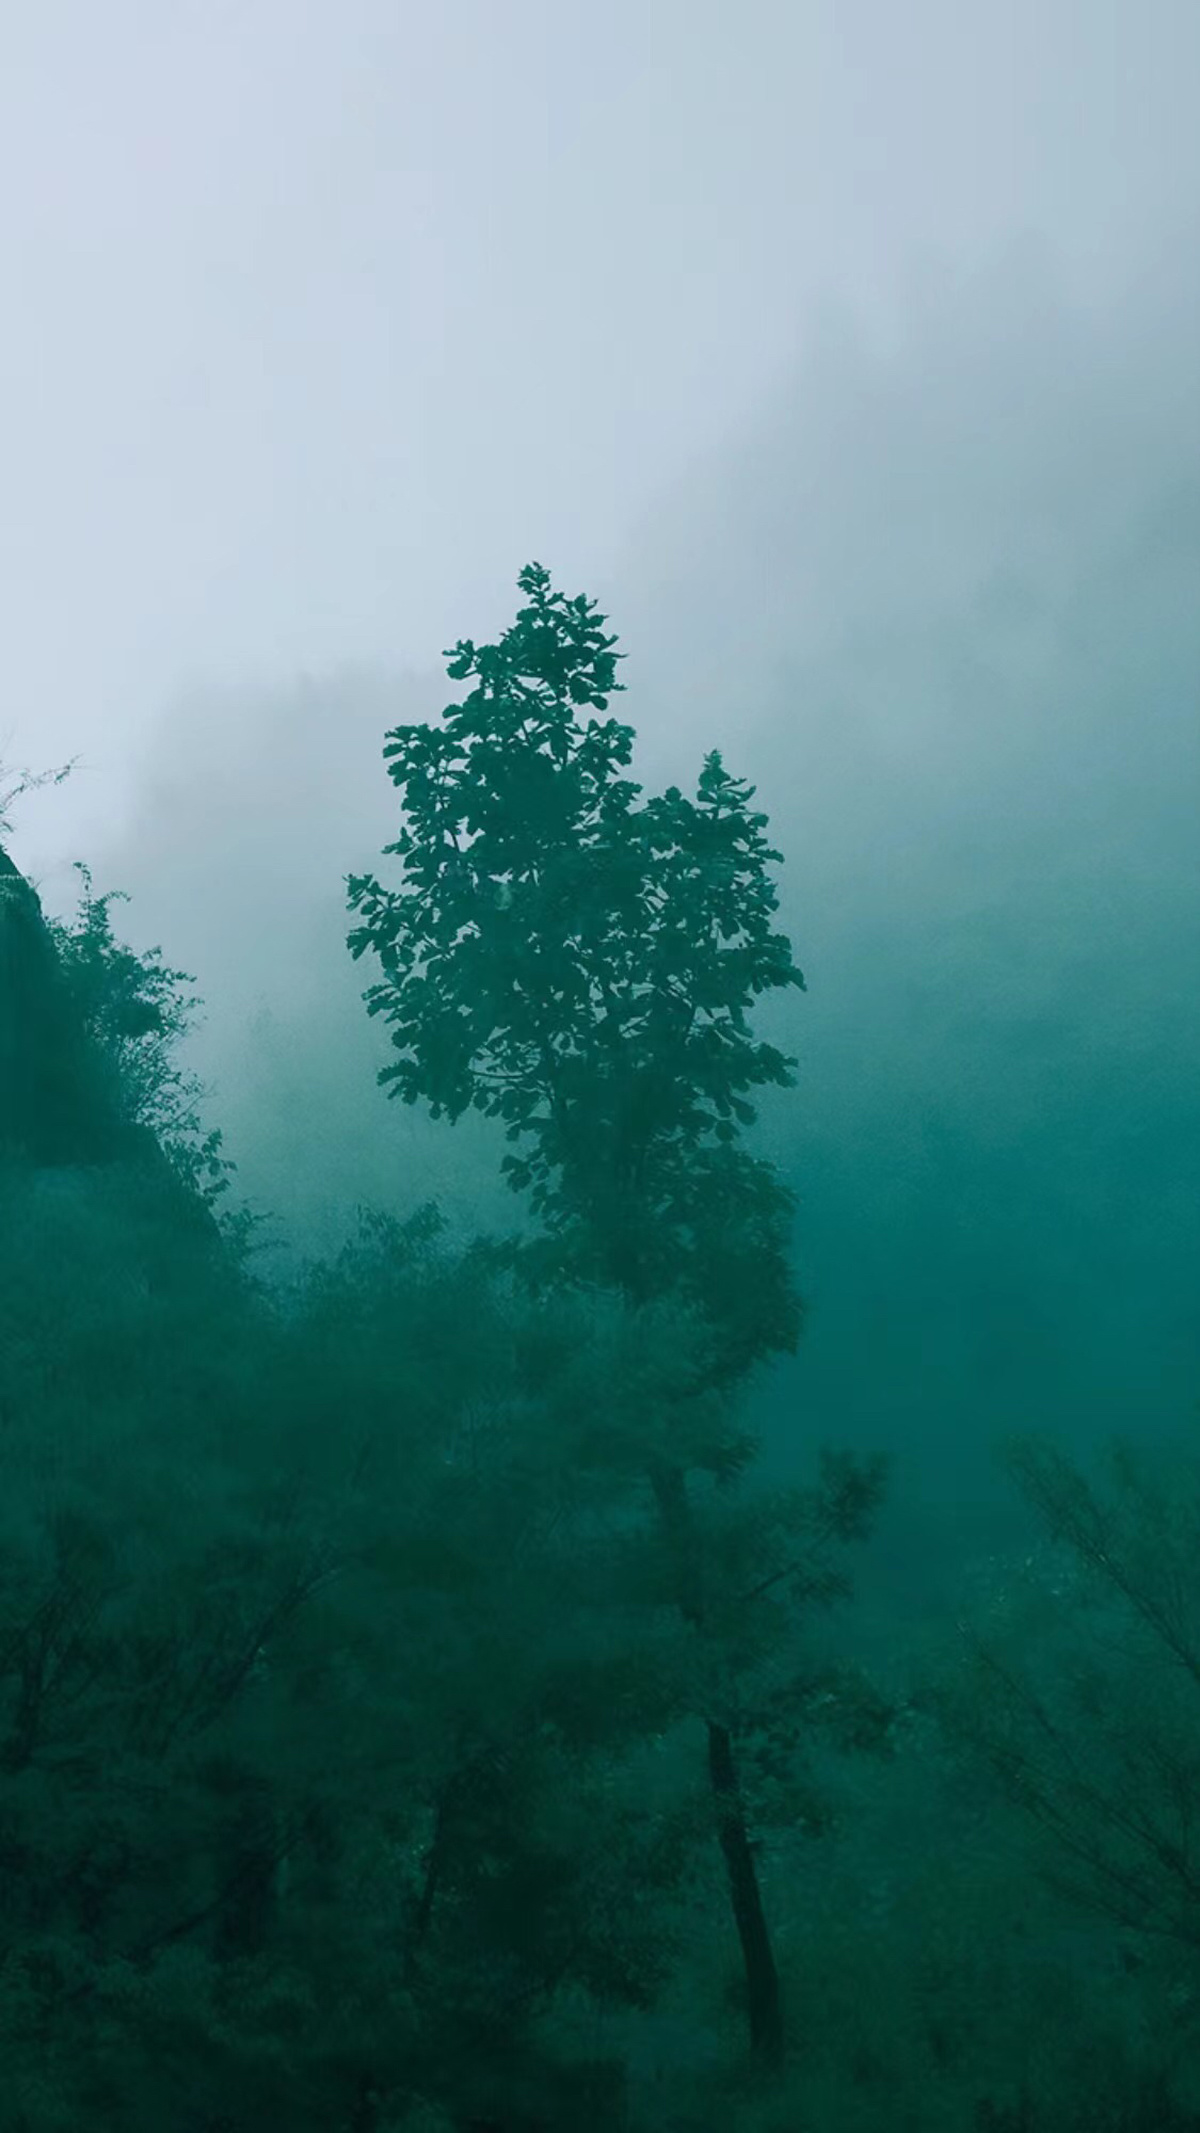 雾蒙蒙的早晨 一棵孤零零的树矗立在雾中